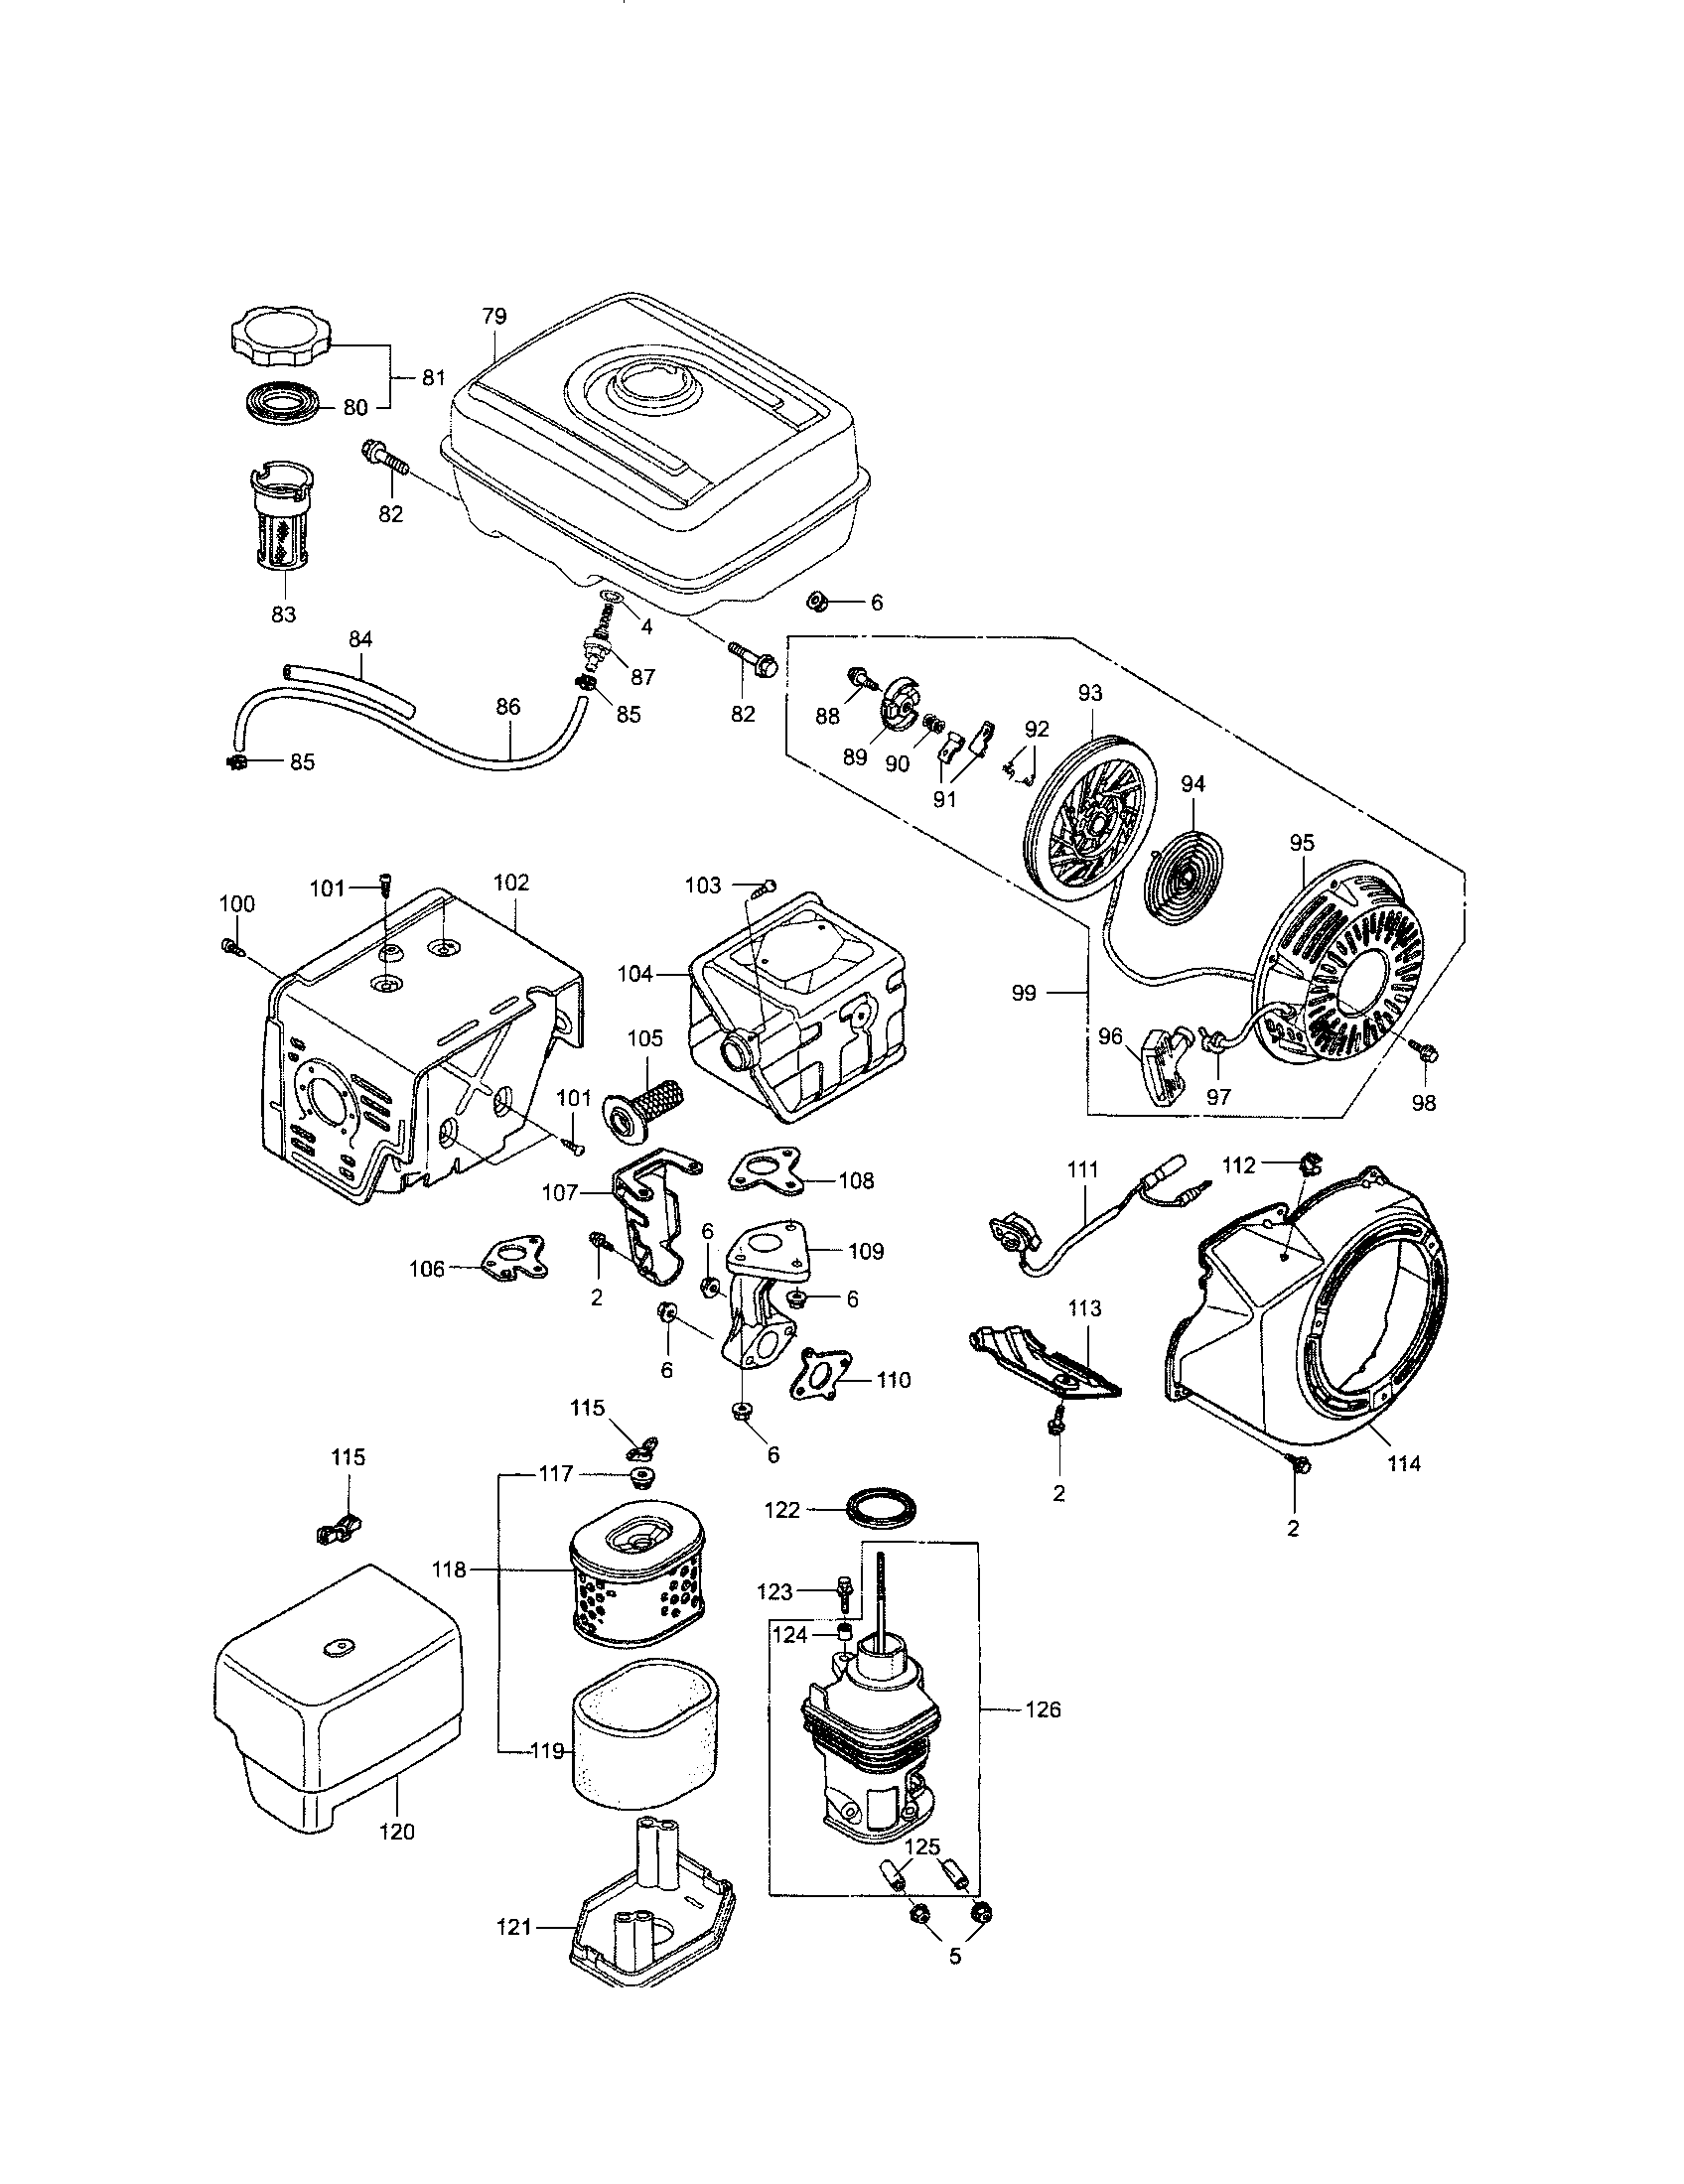 Honda gx630 parts manual